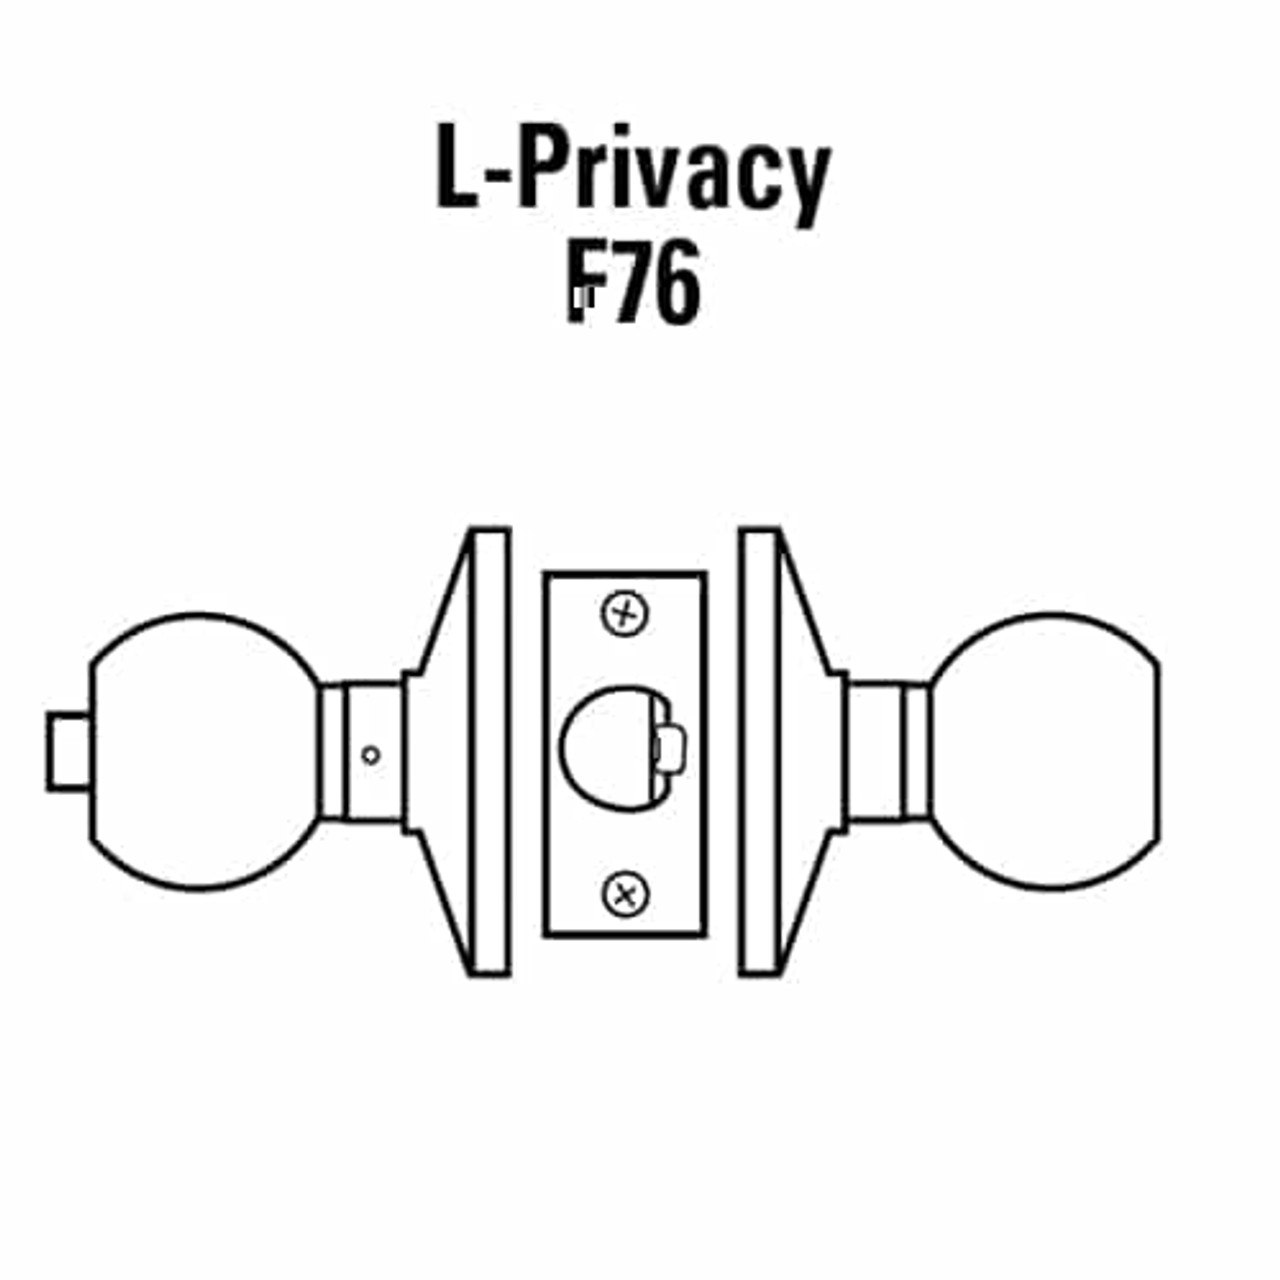 6K30L4DSTK611 Best 6K Series Privacy Medium Duty Cylindrical Knob Locks with Round Style in Bright Bronze